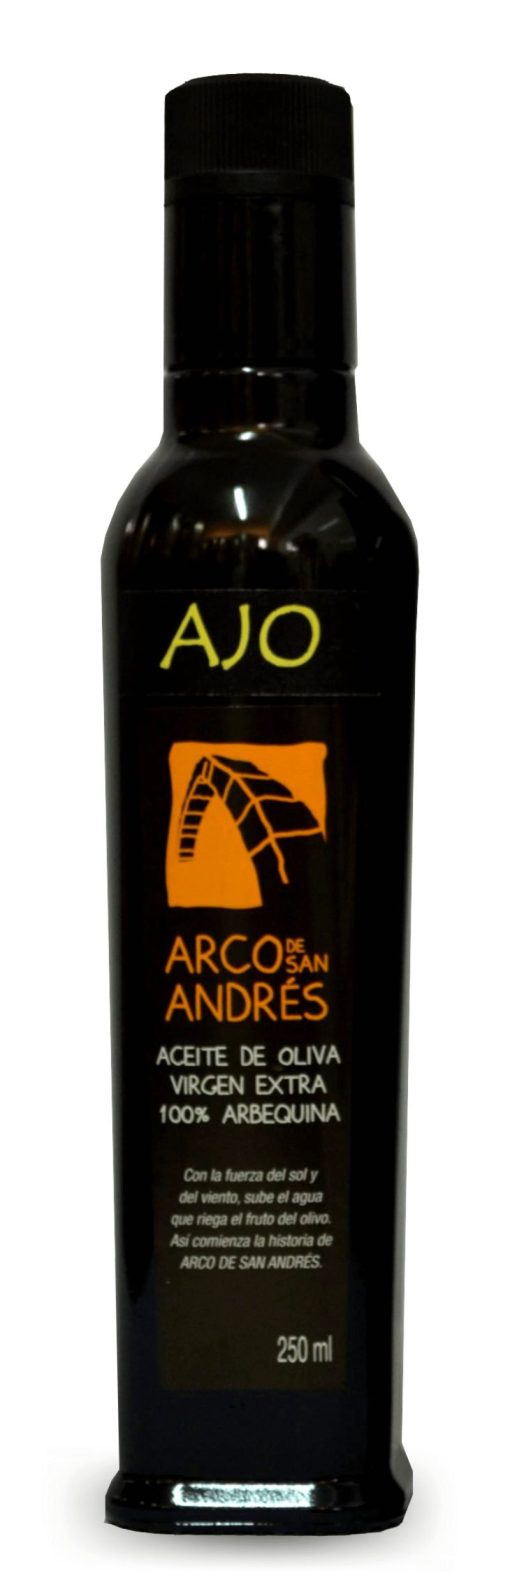 ArcoDeSanAndres AOVE ArbequinoInfusionadoAjo 250ml LU 001 1671552607